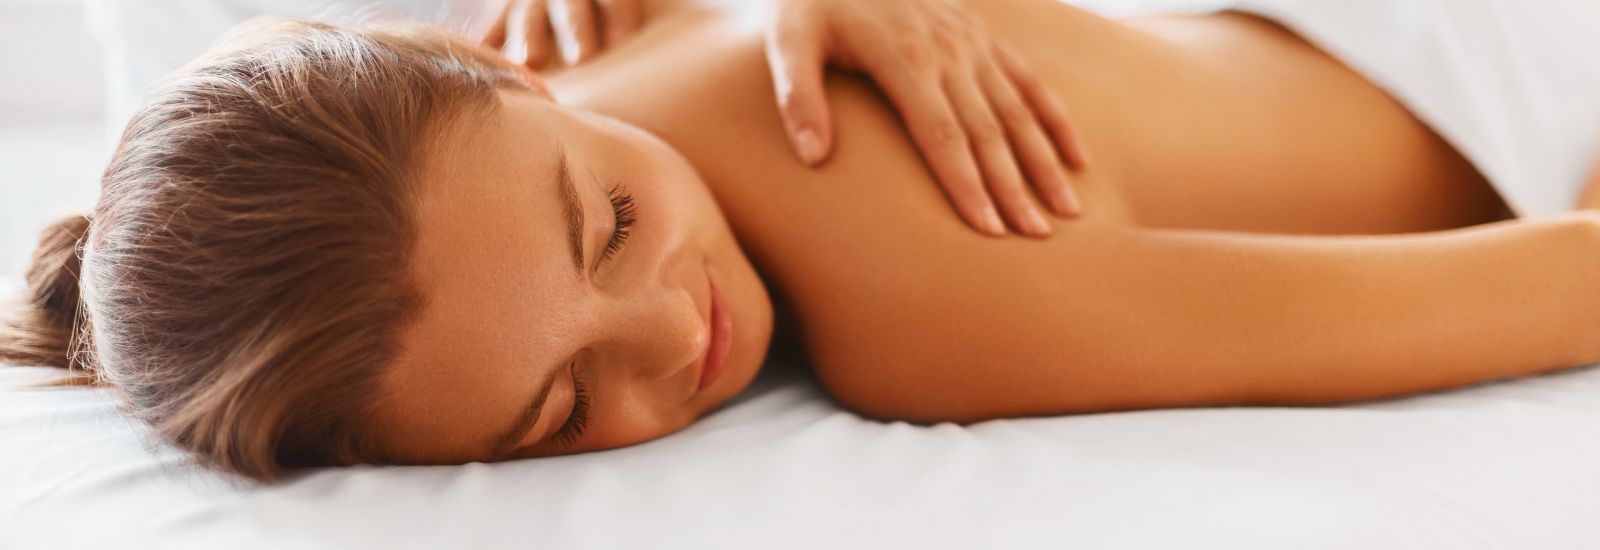 Wellness | Massage Therapy | Reid Health